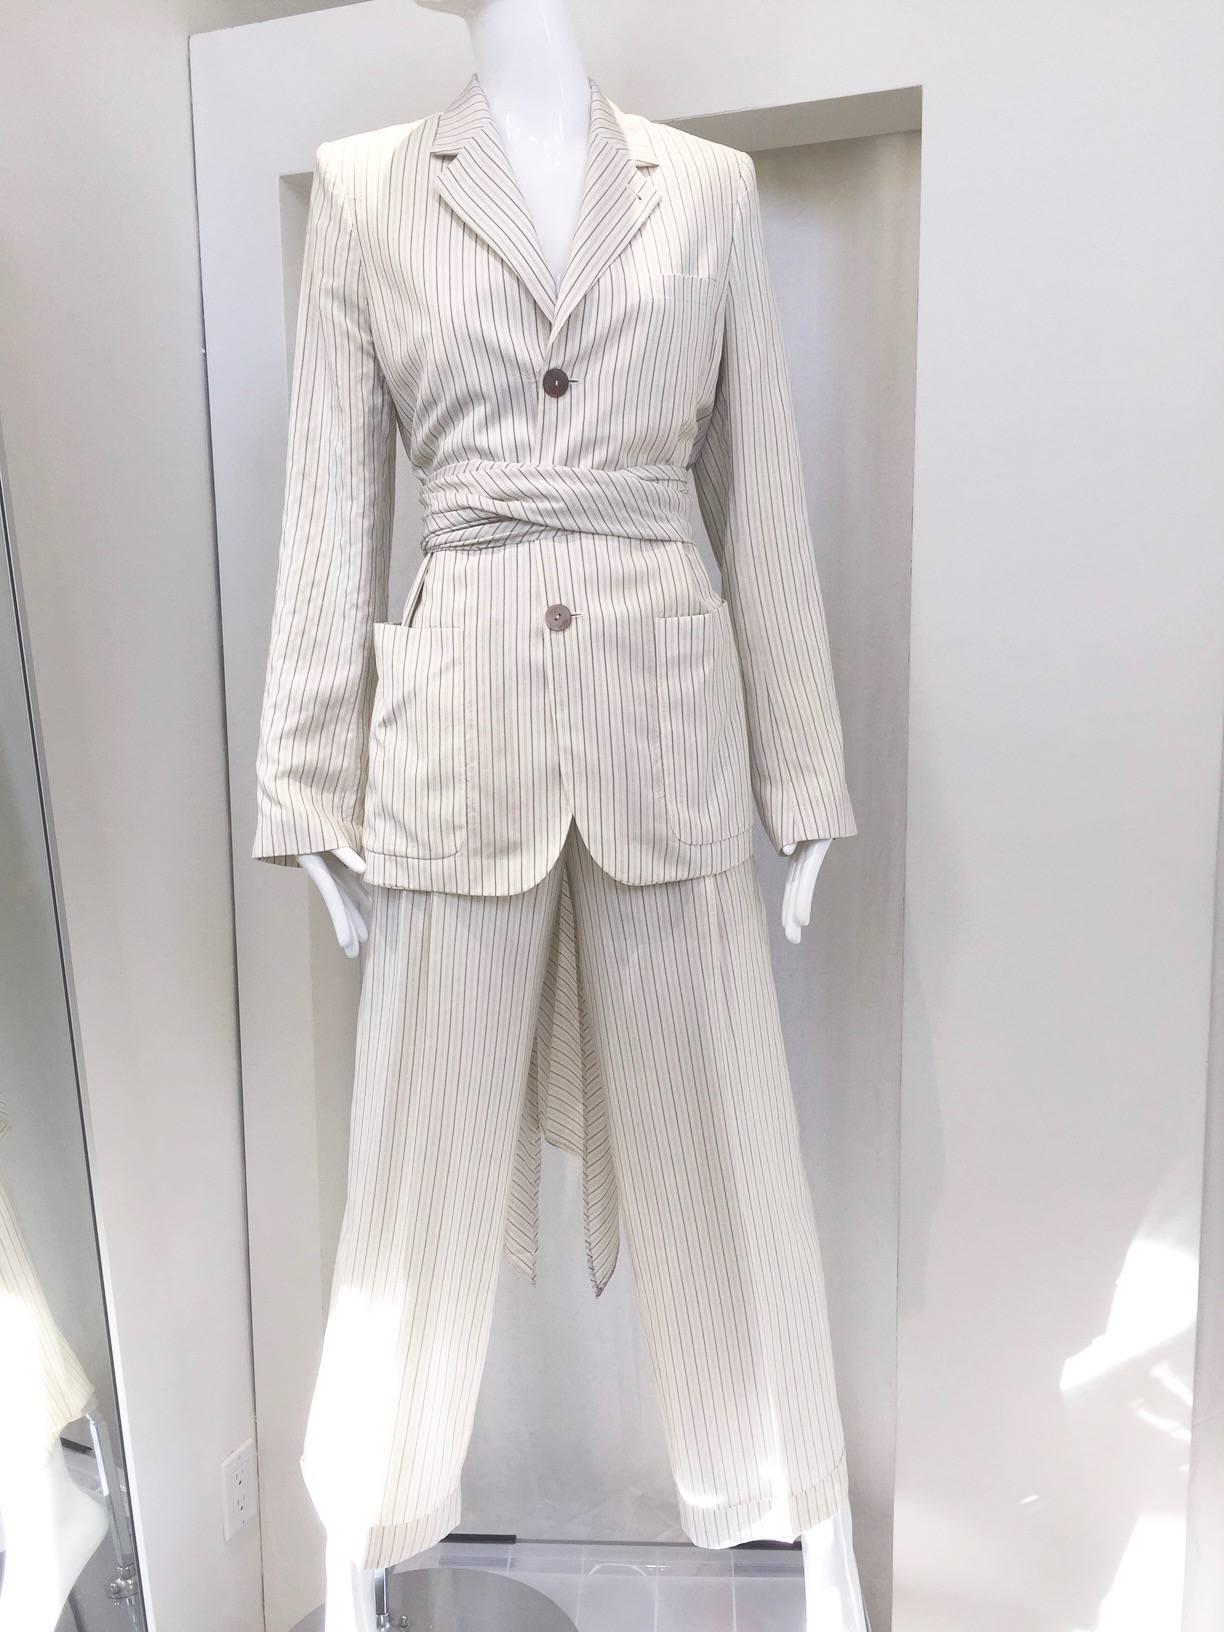 1980s Jean Paul Gaultier creme pin stripe silk blazer pants set.
open back, with silk sash wrap around the waist.
Marked size 10 but it fit size 6.

Measurement for Blazer:
Shoulder: 15